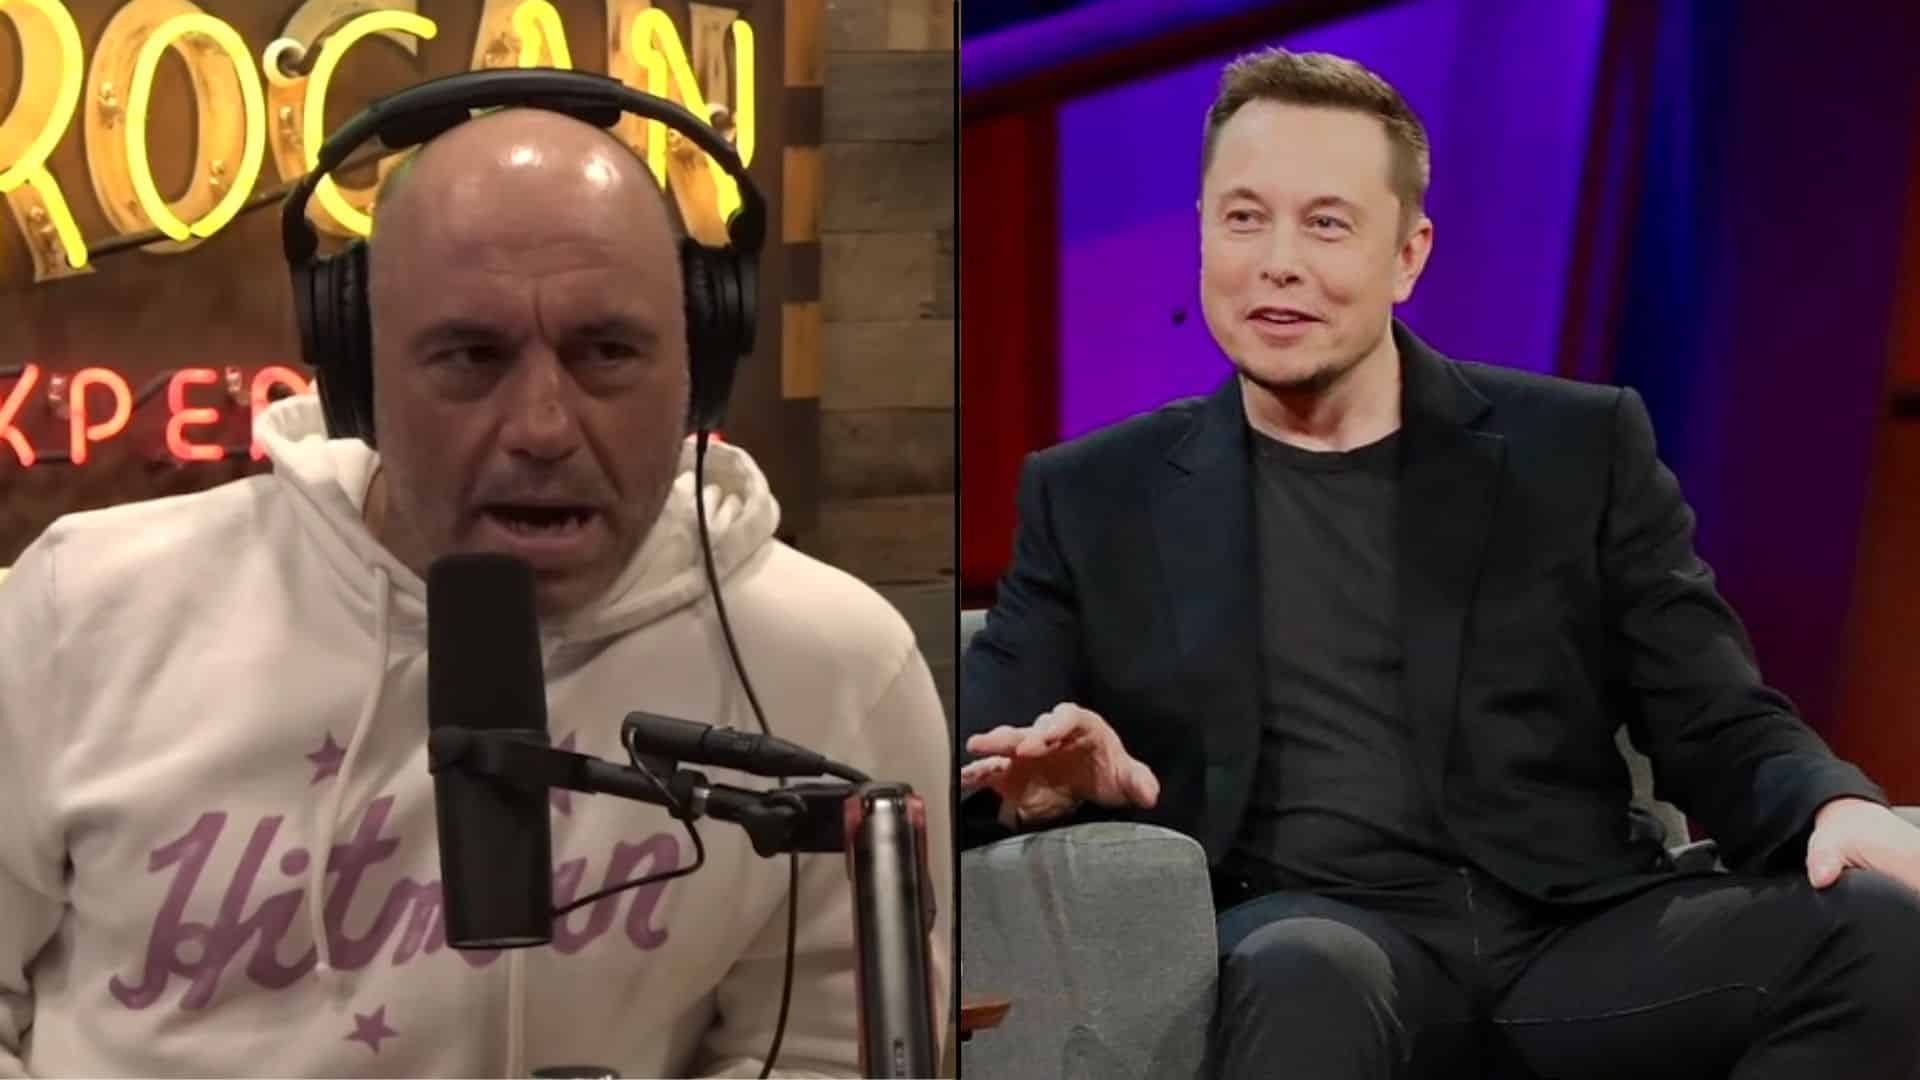 Joe Rogan alongside Elon Musk talking